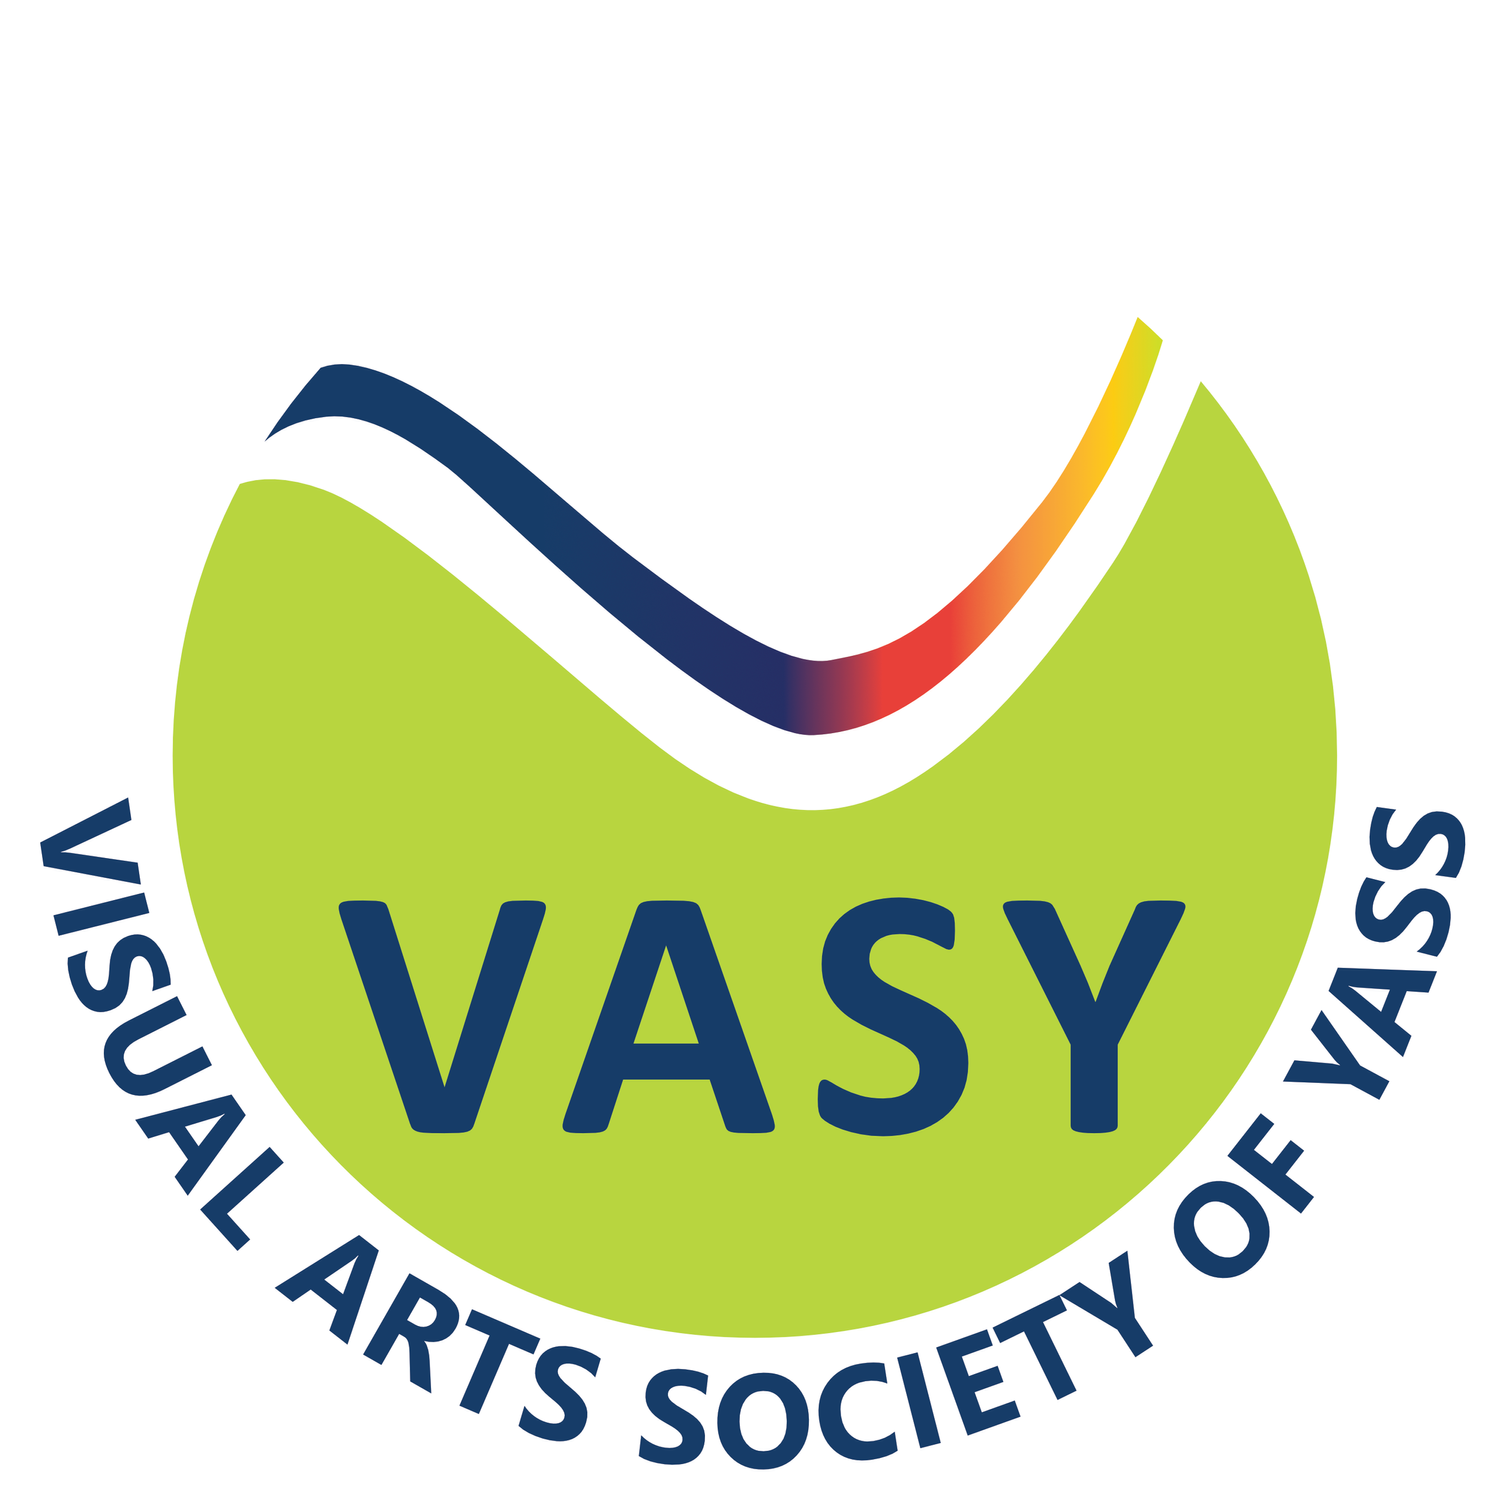 Visual Arts Society of Yass